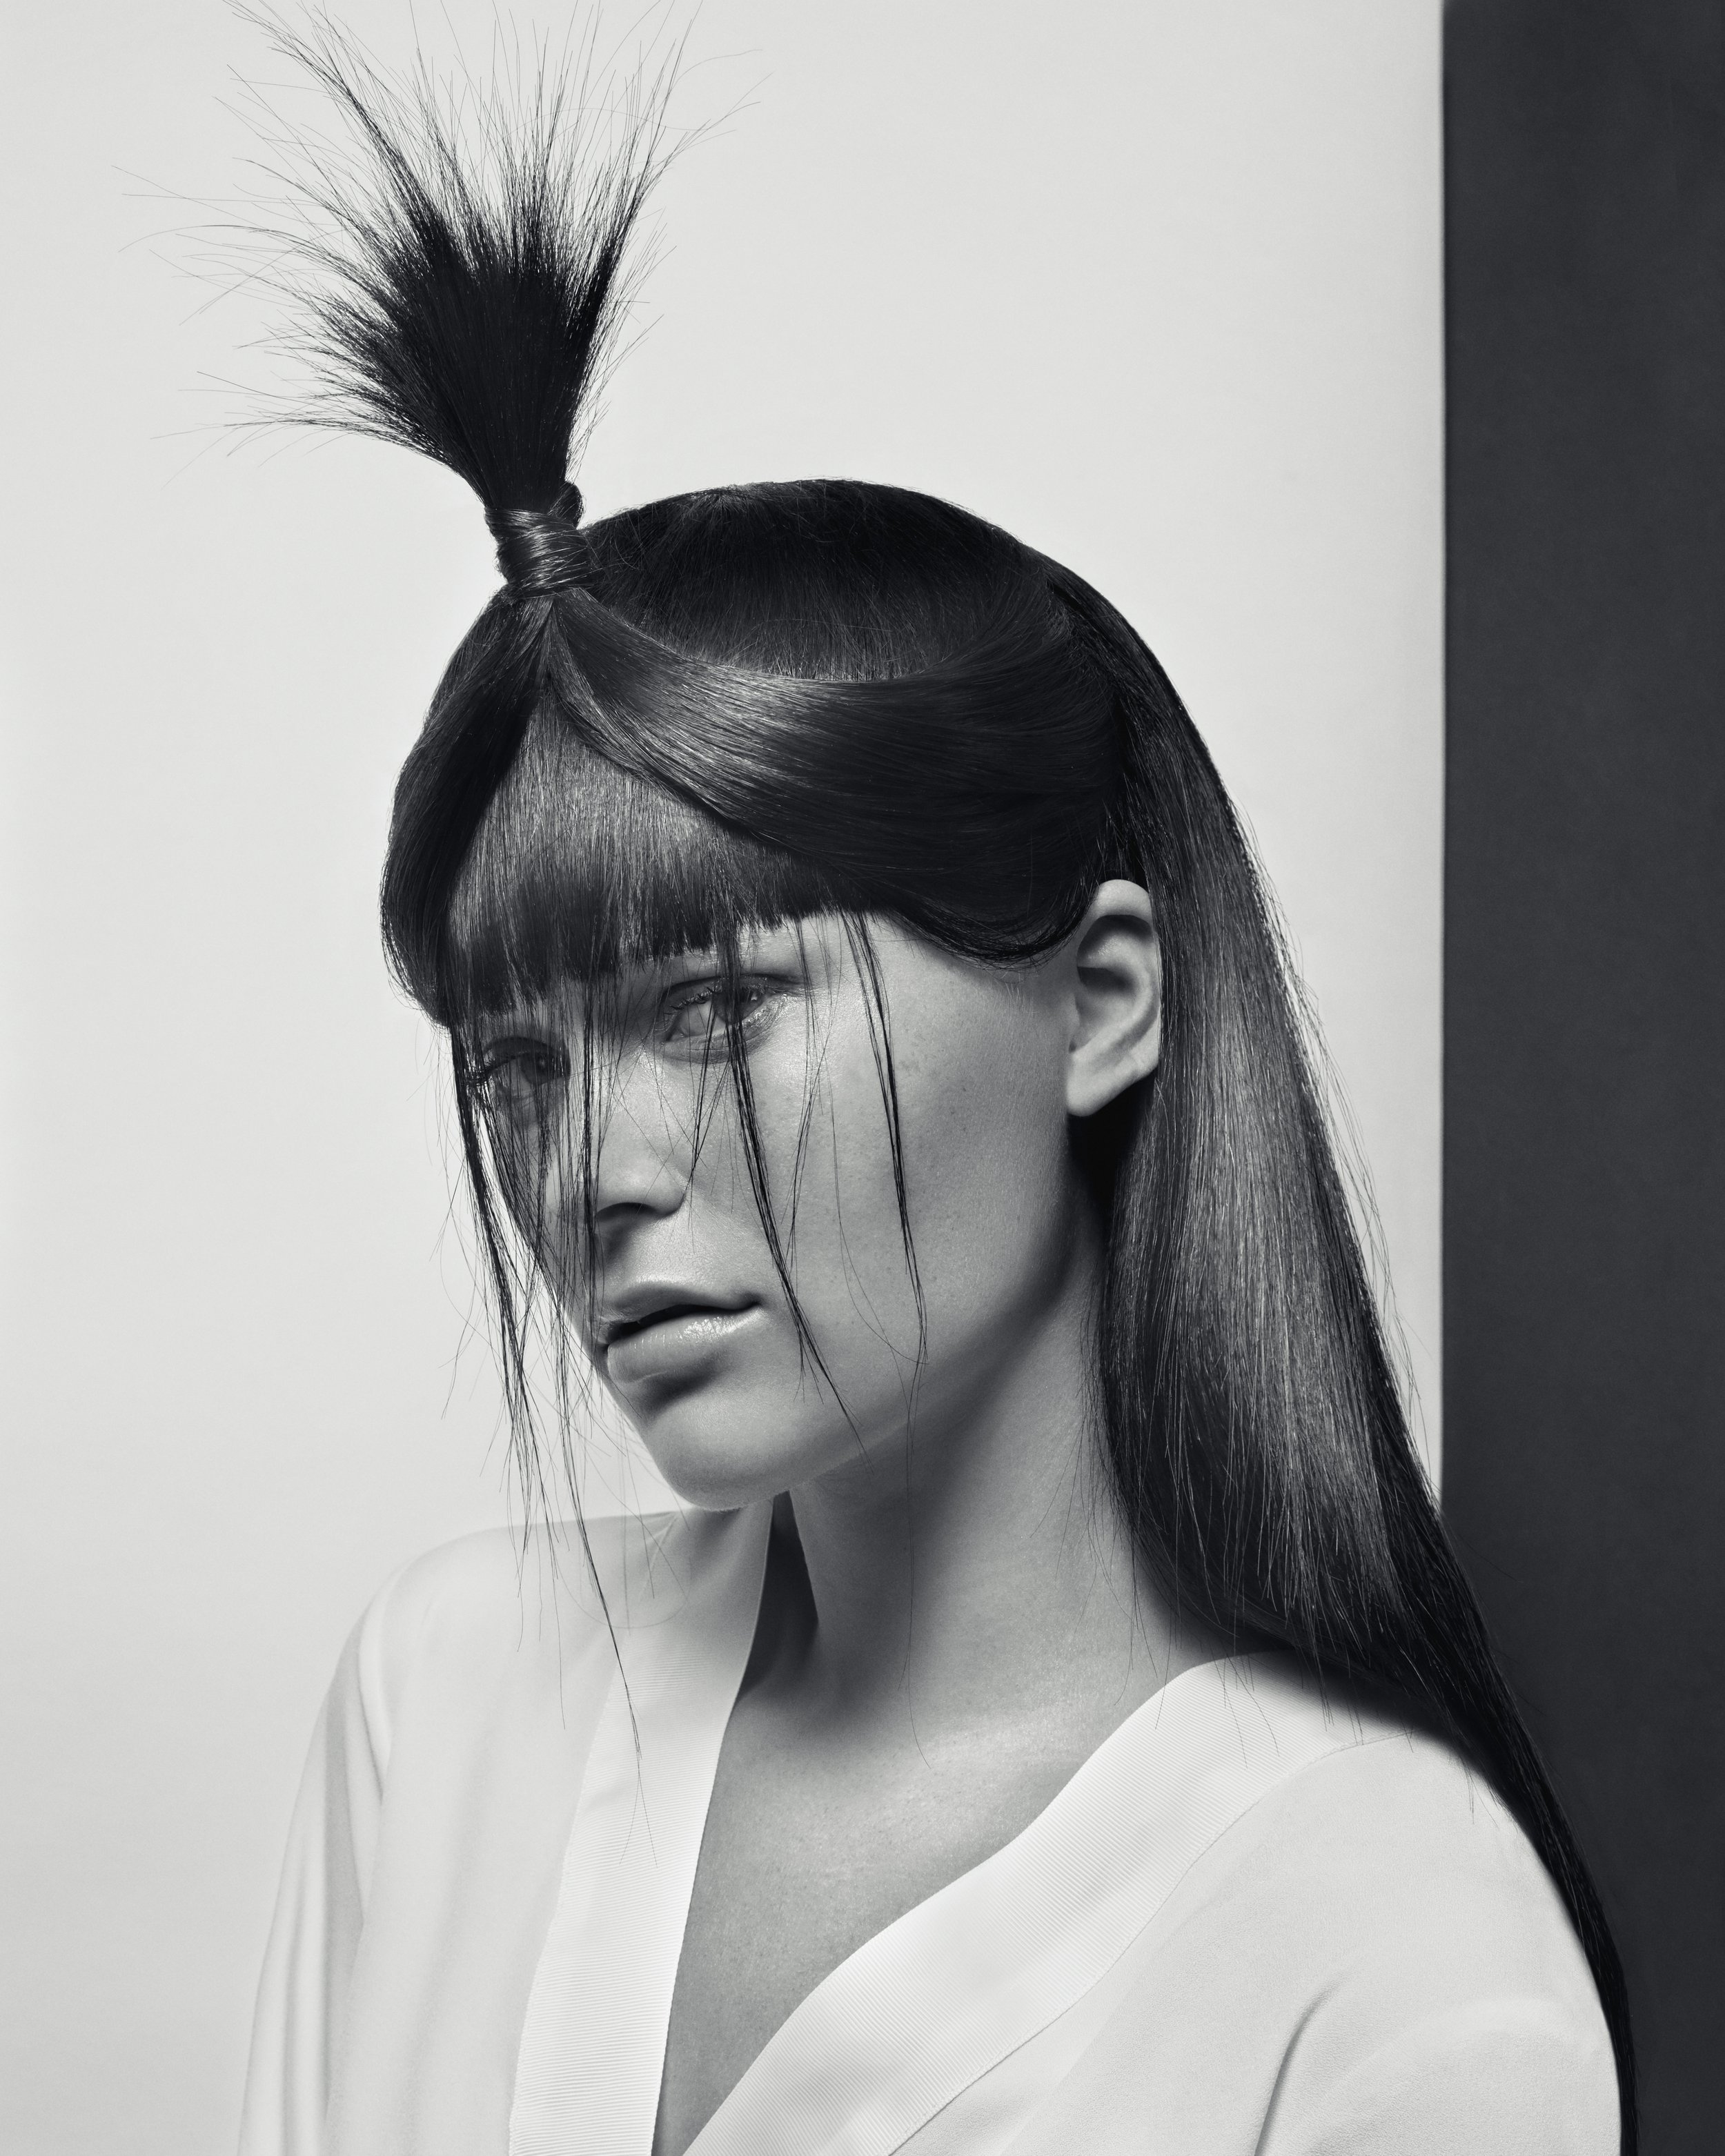 NoraOrthofer-Hairandmakeup-London-publication-feroce-Magazine-the hair issue shelley sumner -3.jpg